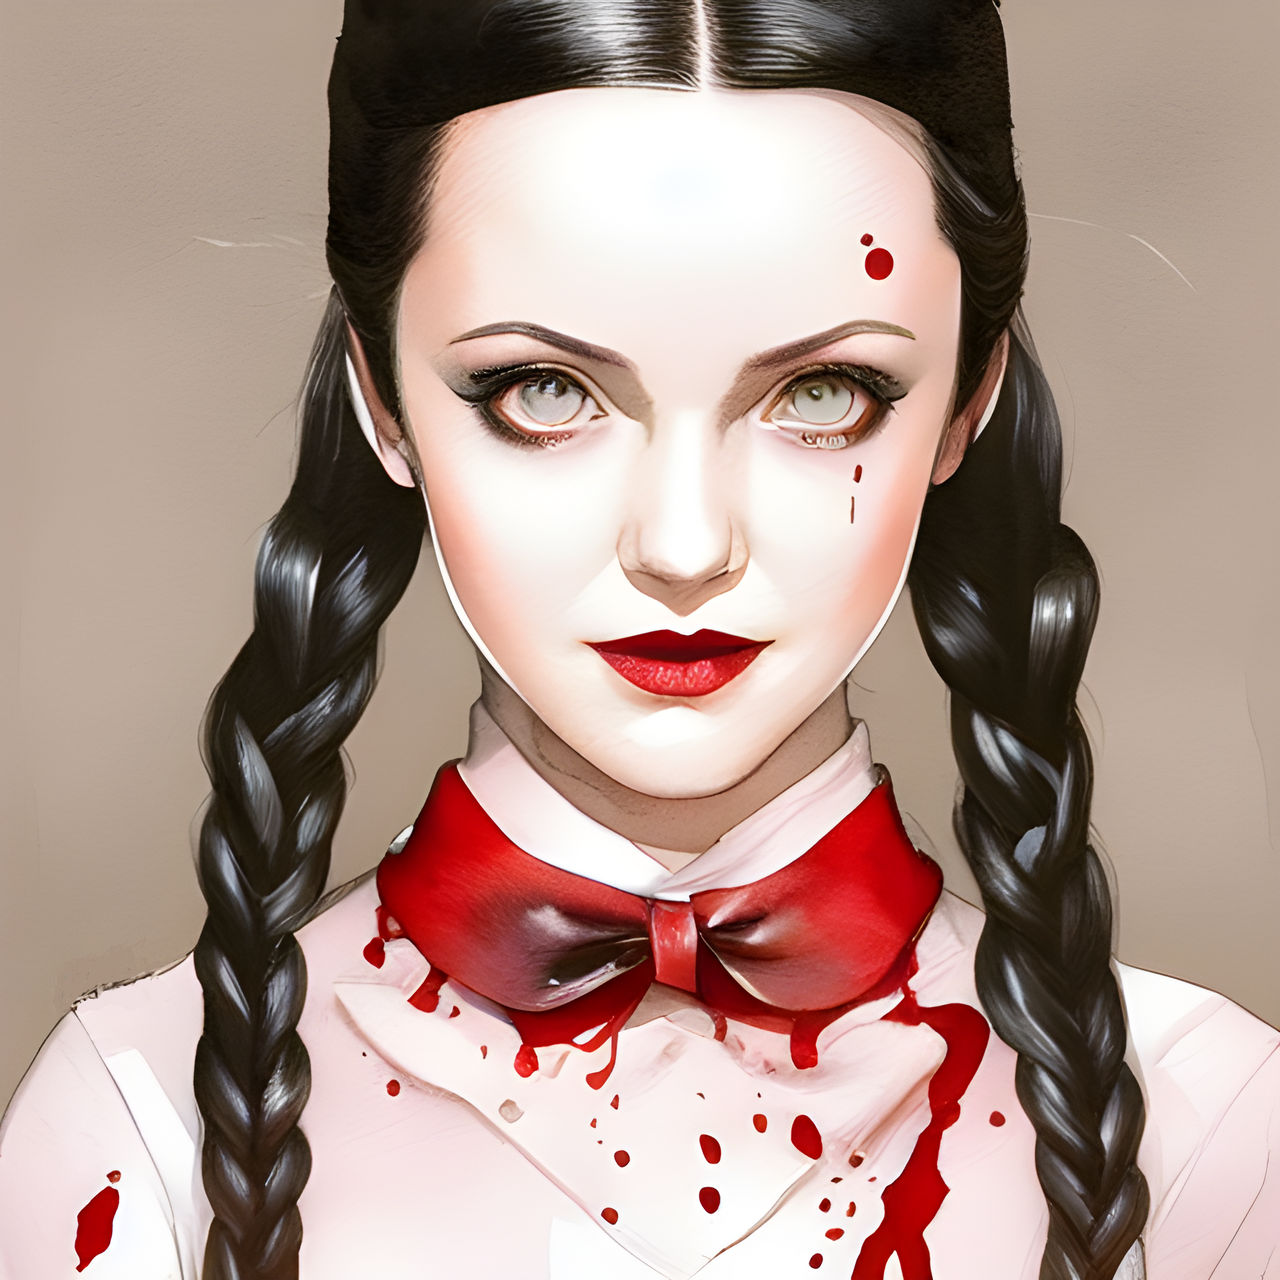 Sweet bloody girl by madfreakyrat on DeviantArt